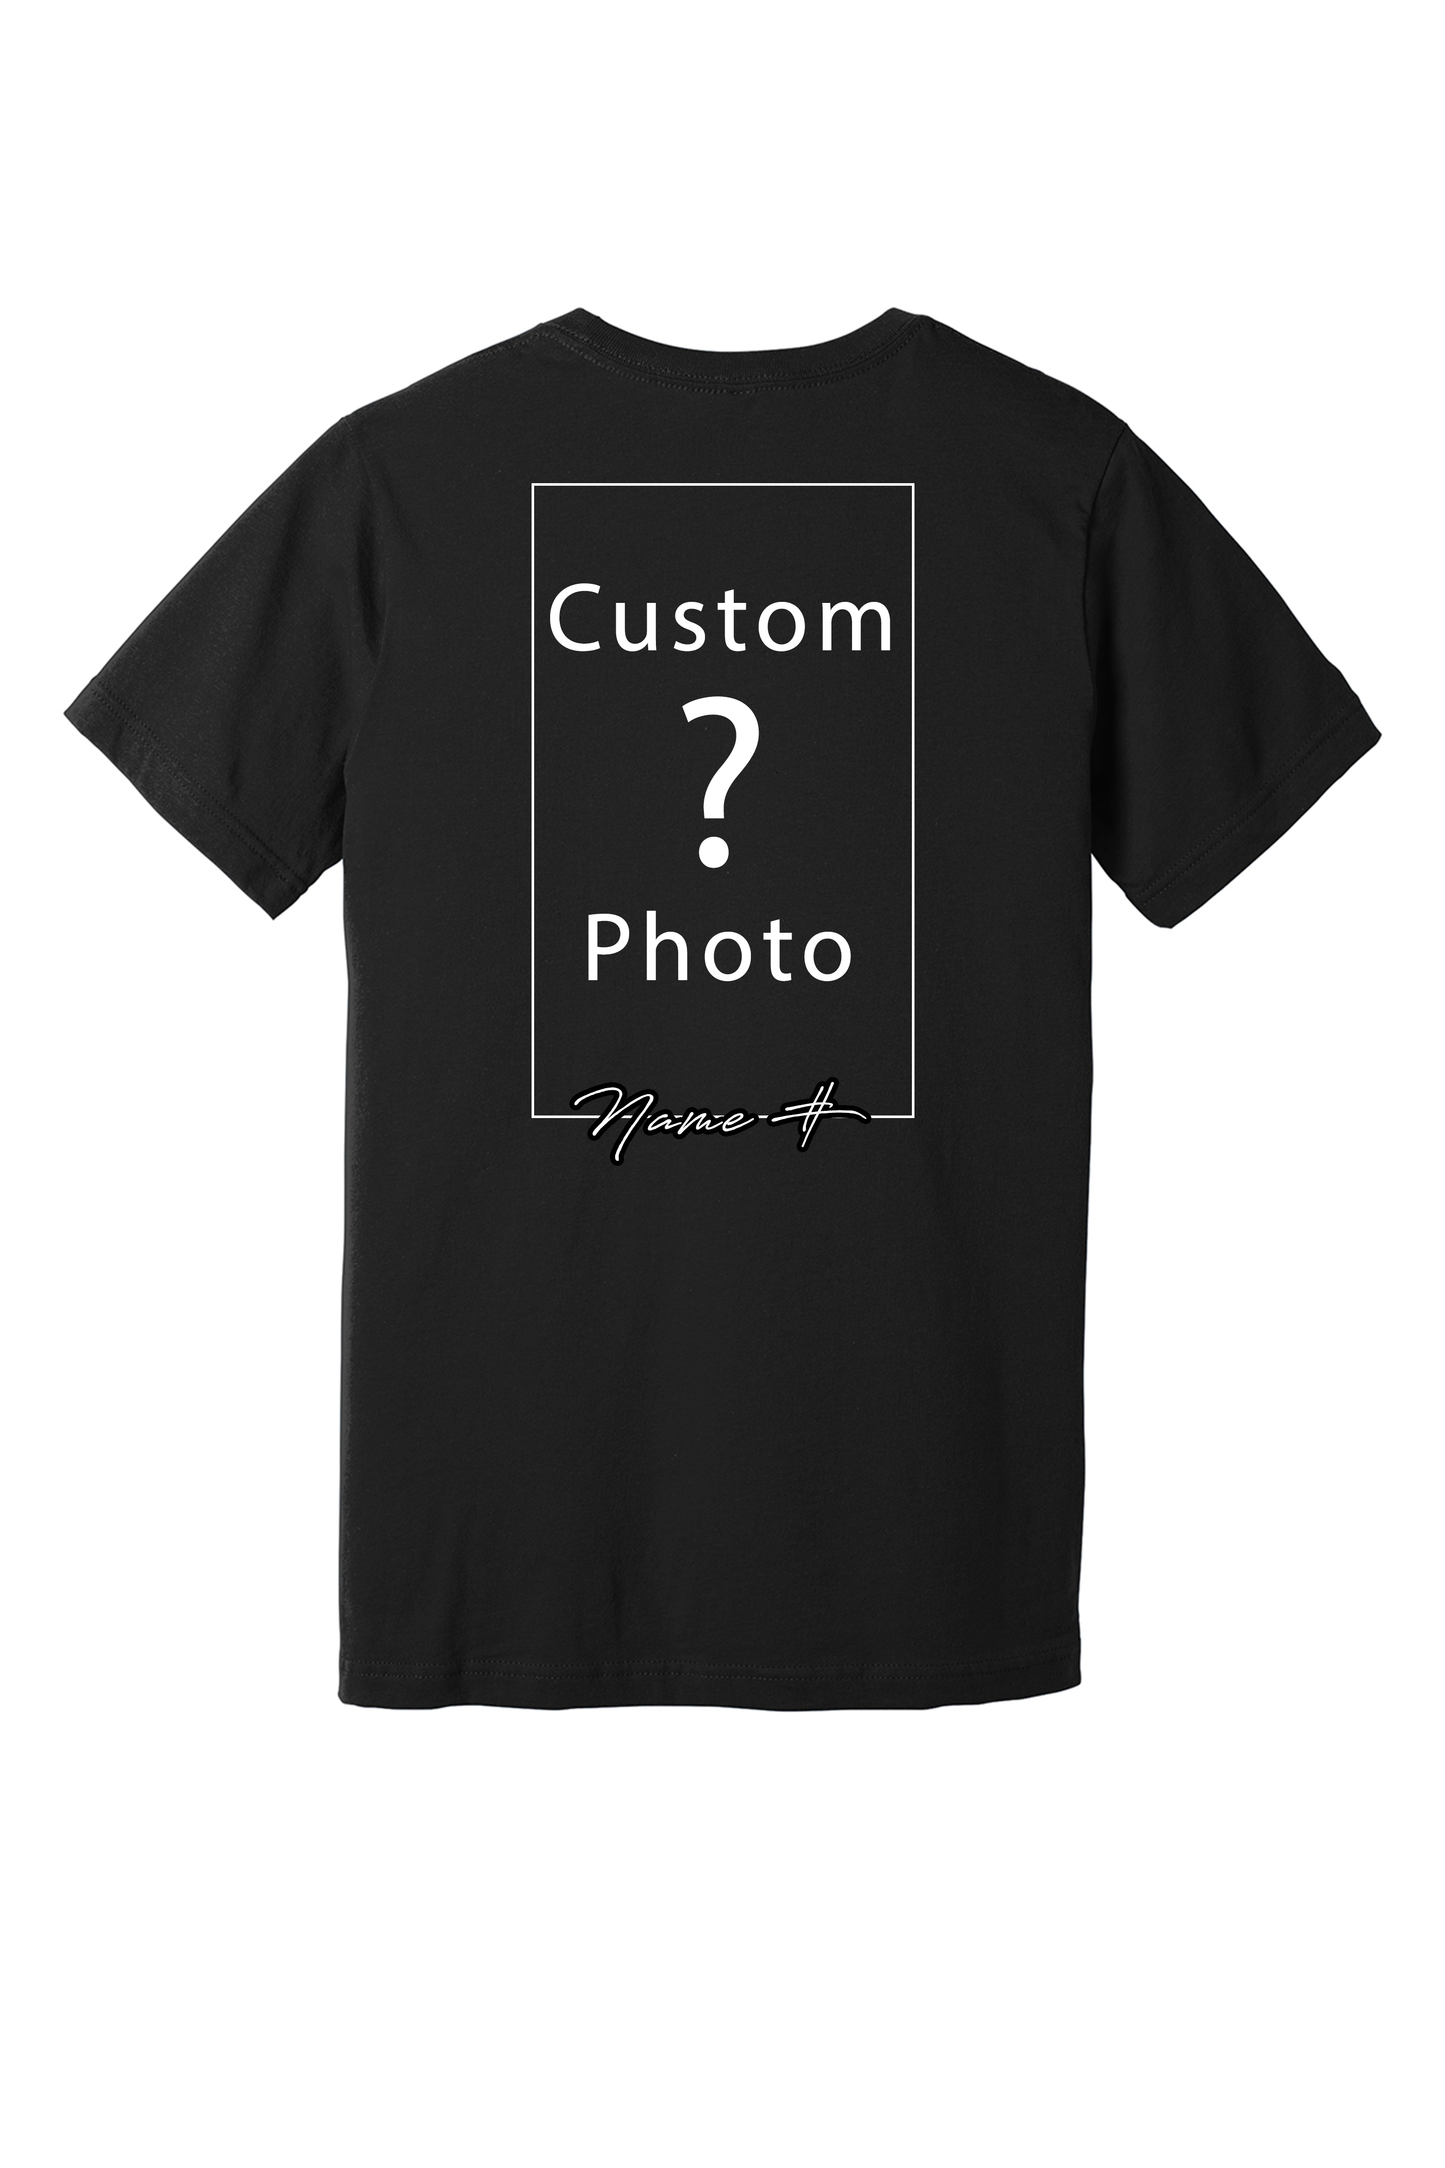 Verbhal - Custom Photo T-Shirt